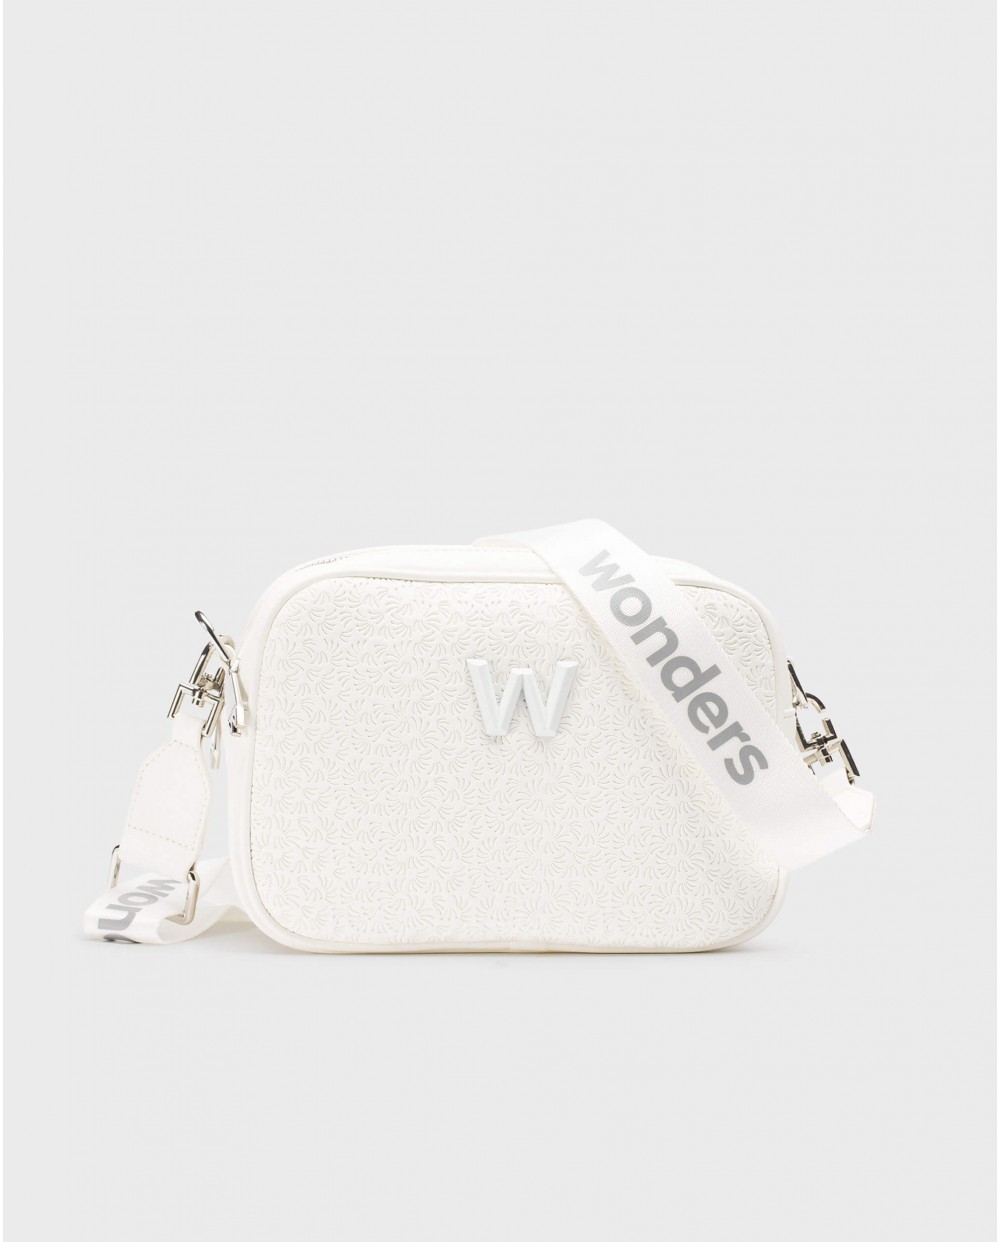 Wonders-Women accessories-ALON White Bag